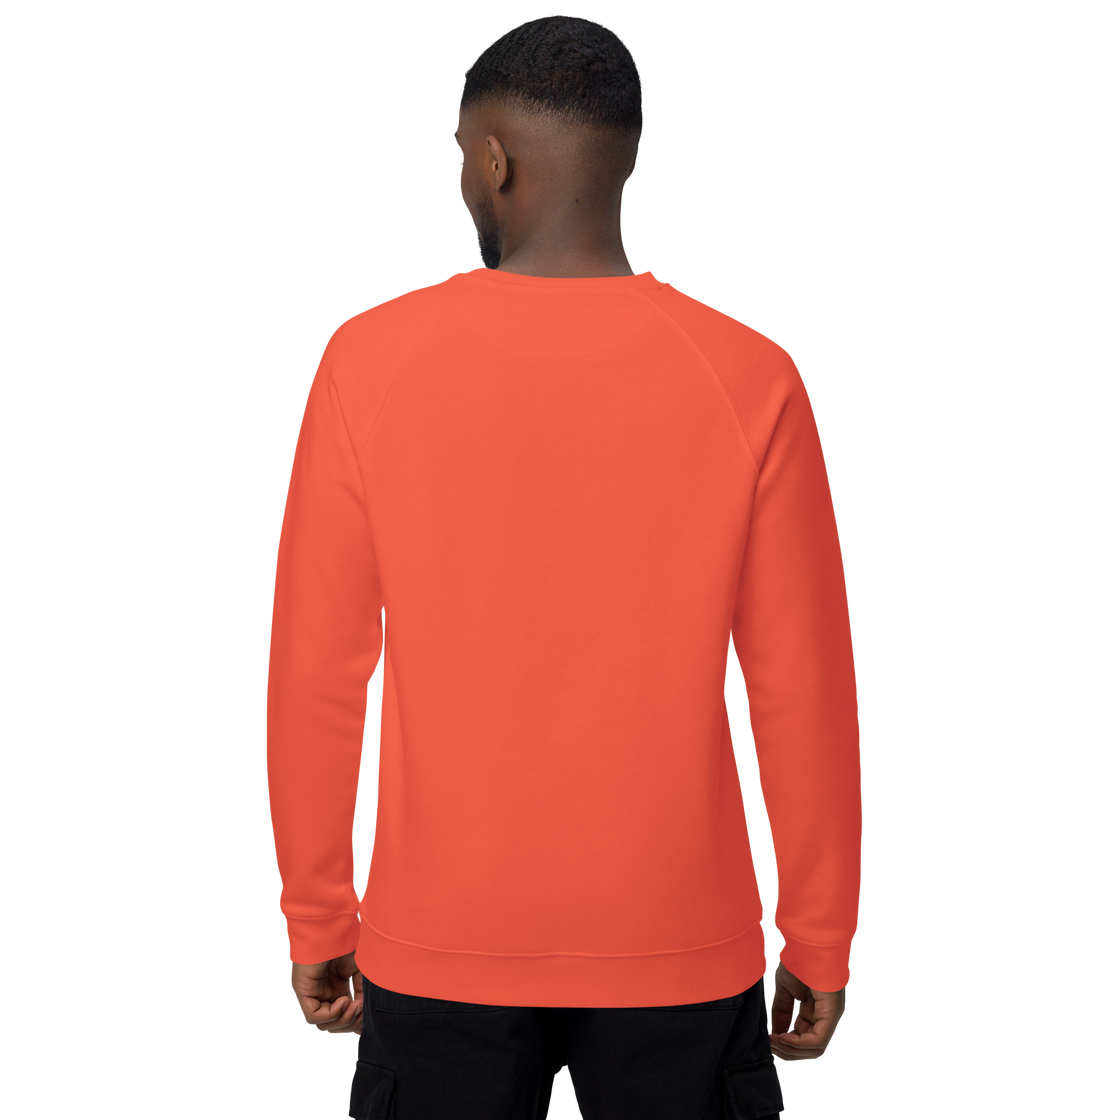 FLY³ organic raglan sweatshirt | Flycube